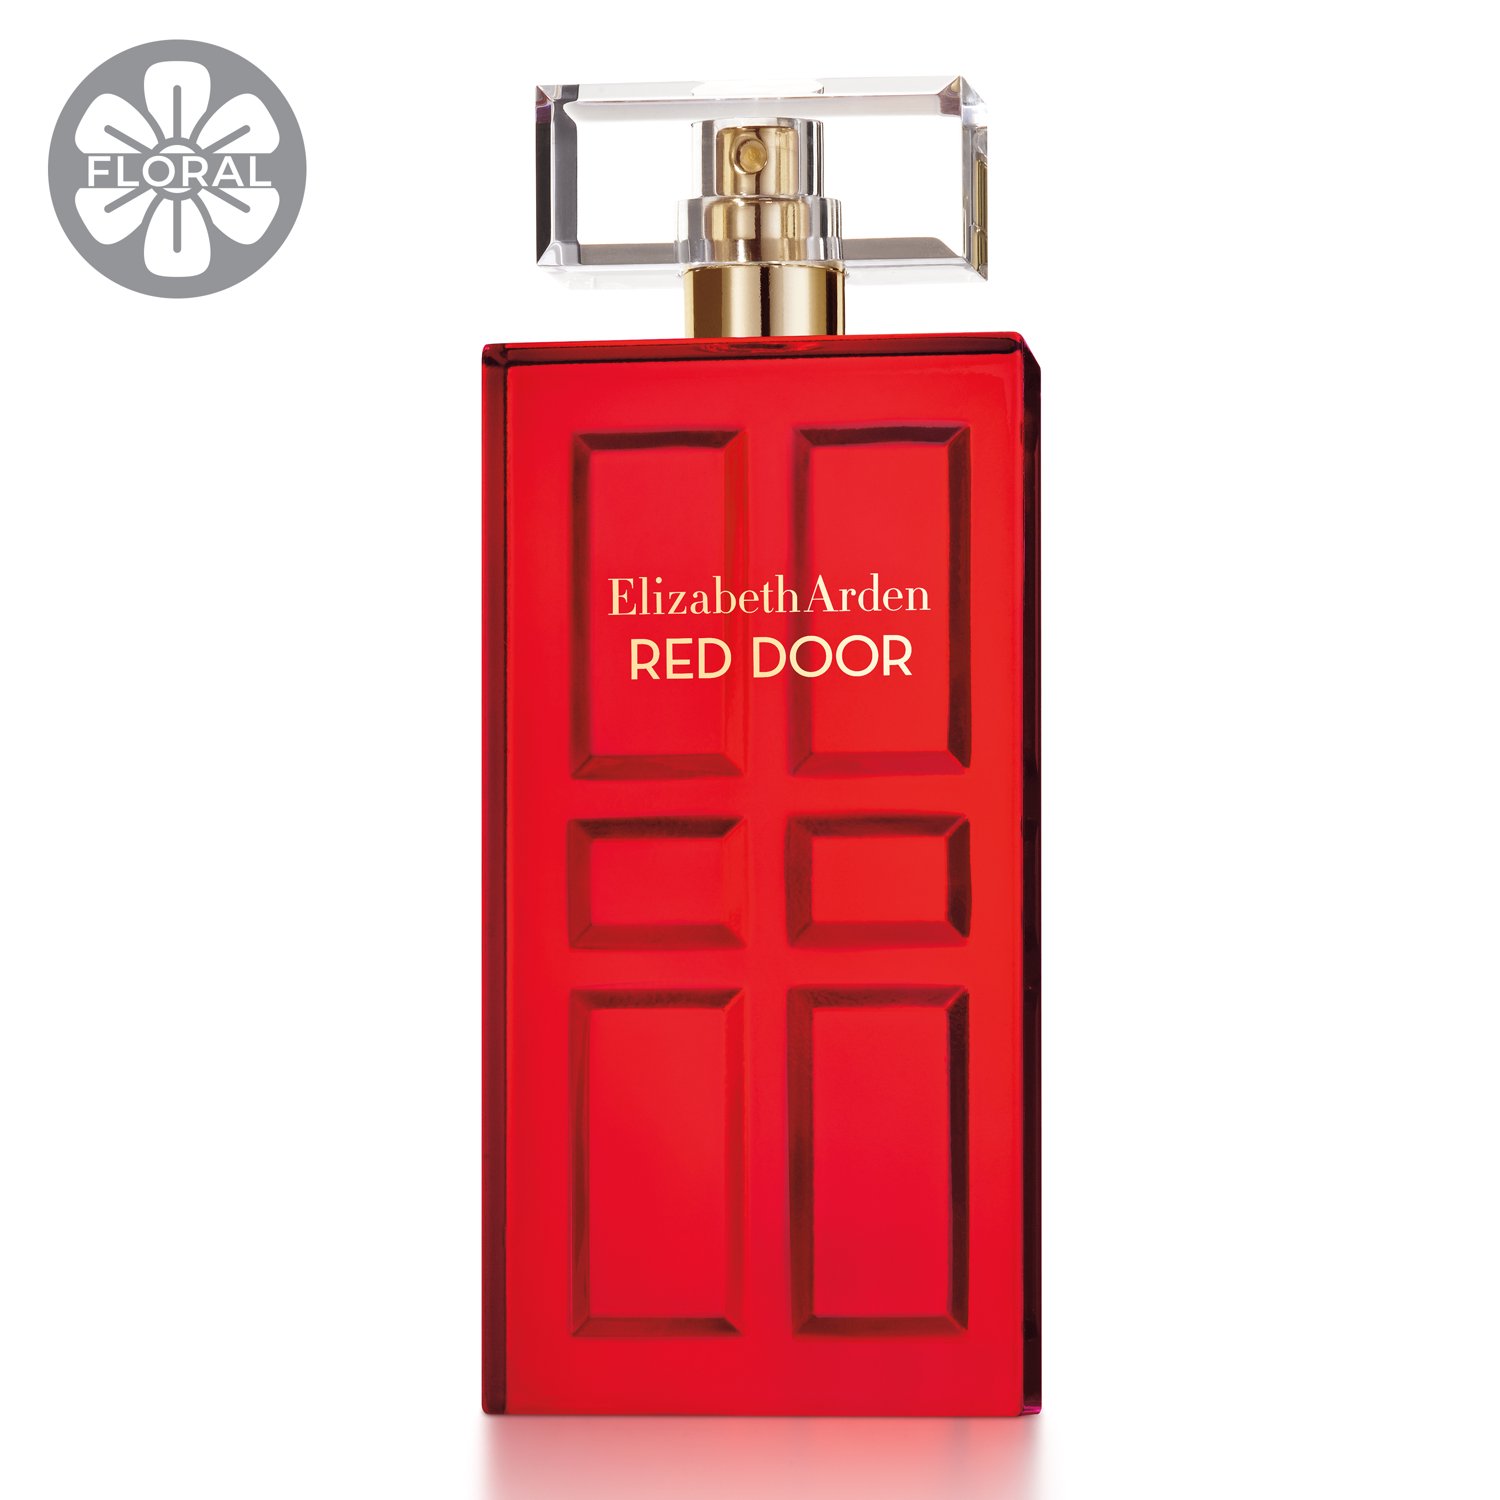 Elizabeth Arden Red Door Eau de Toilette, Perfume for Women, 3.3 fl oz - image 1 of 6